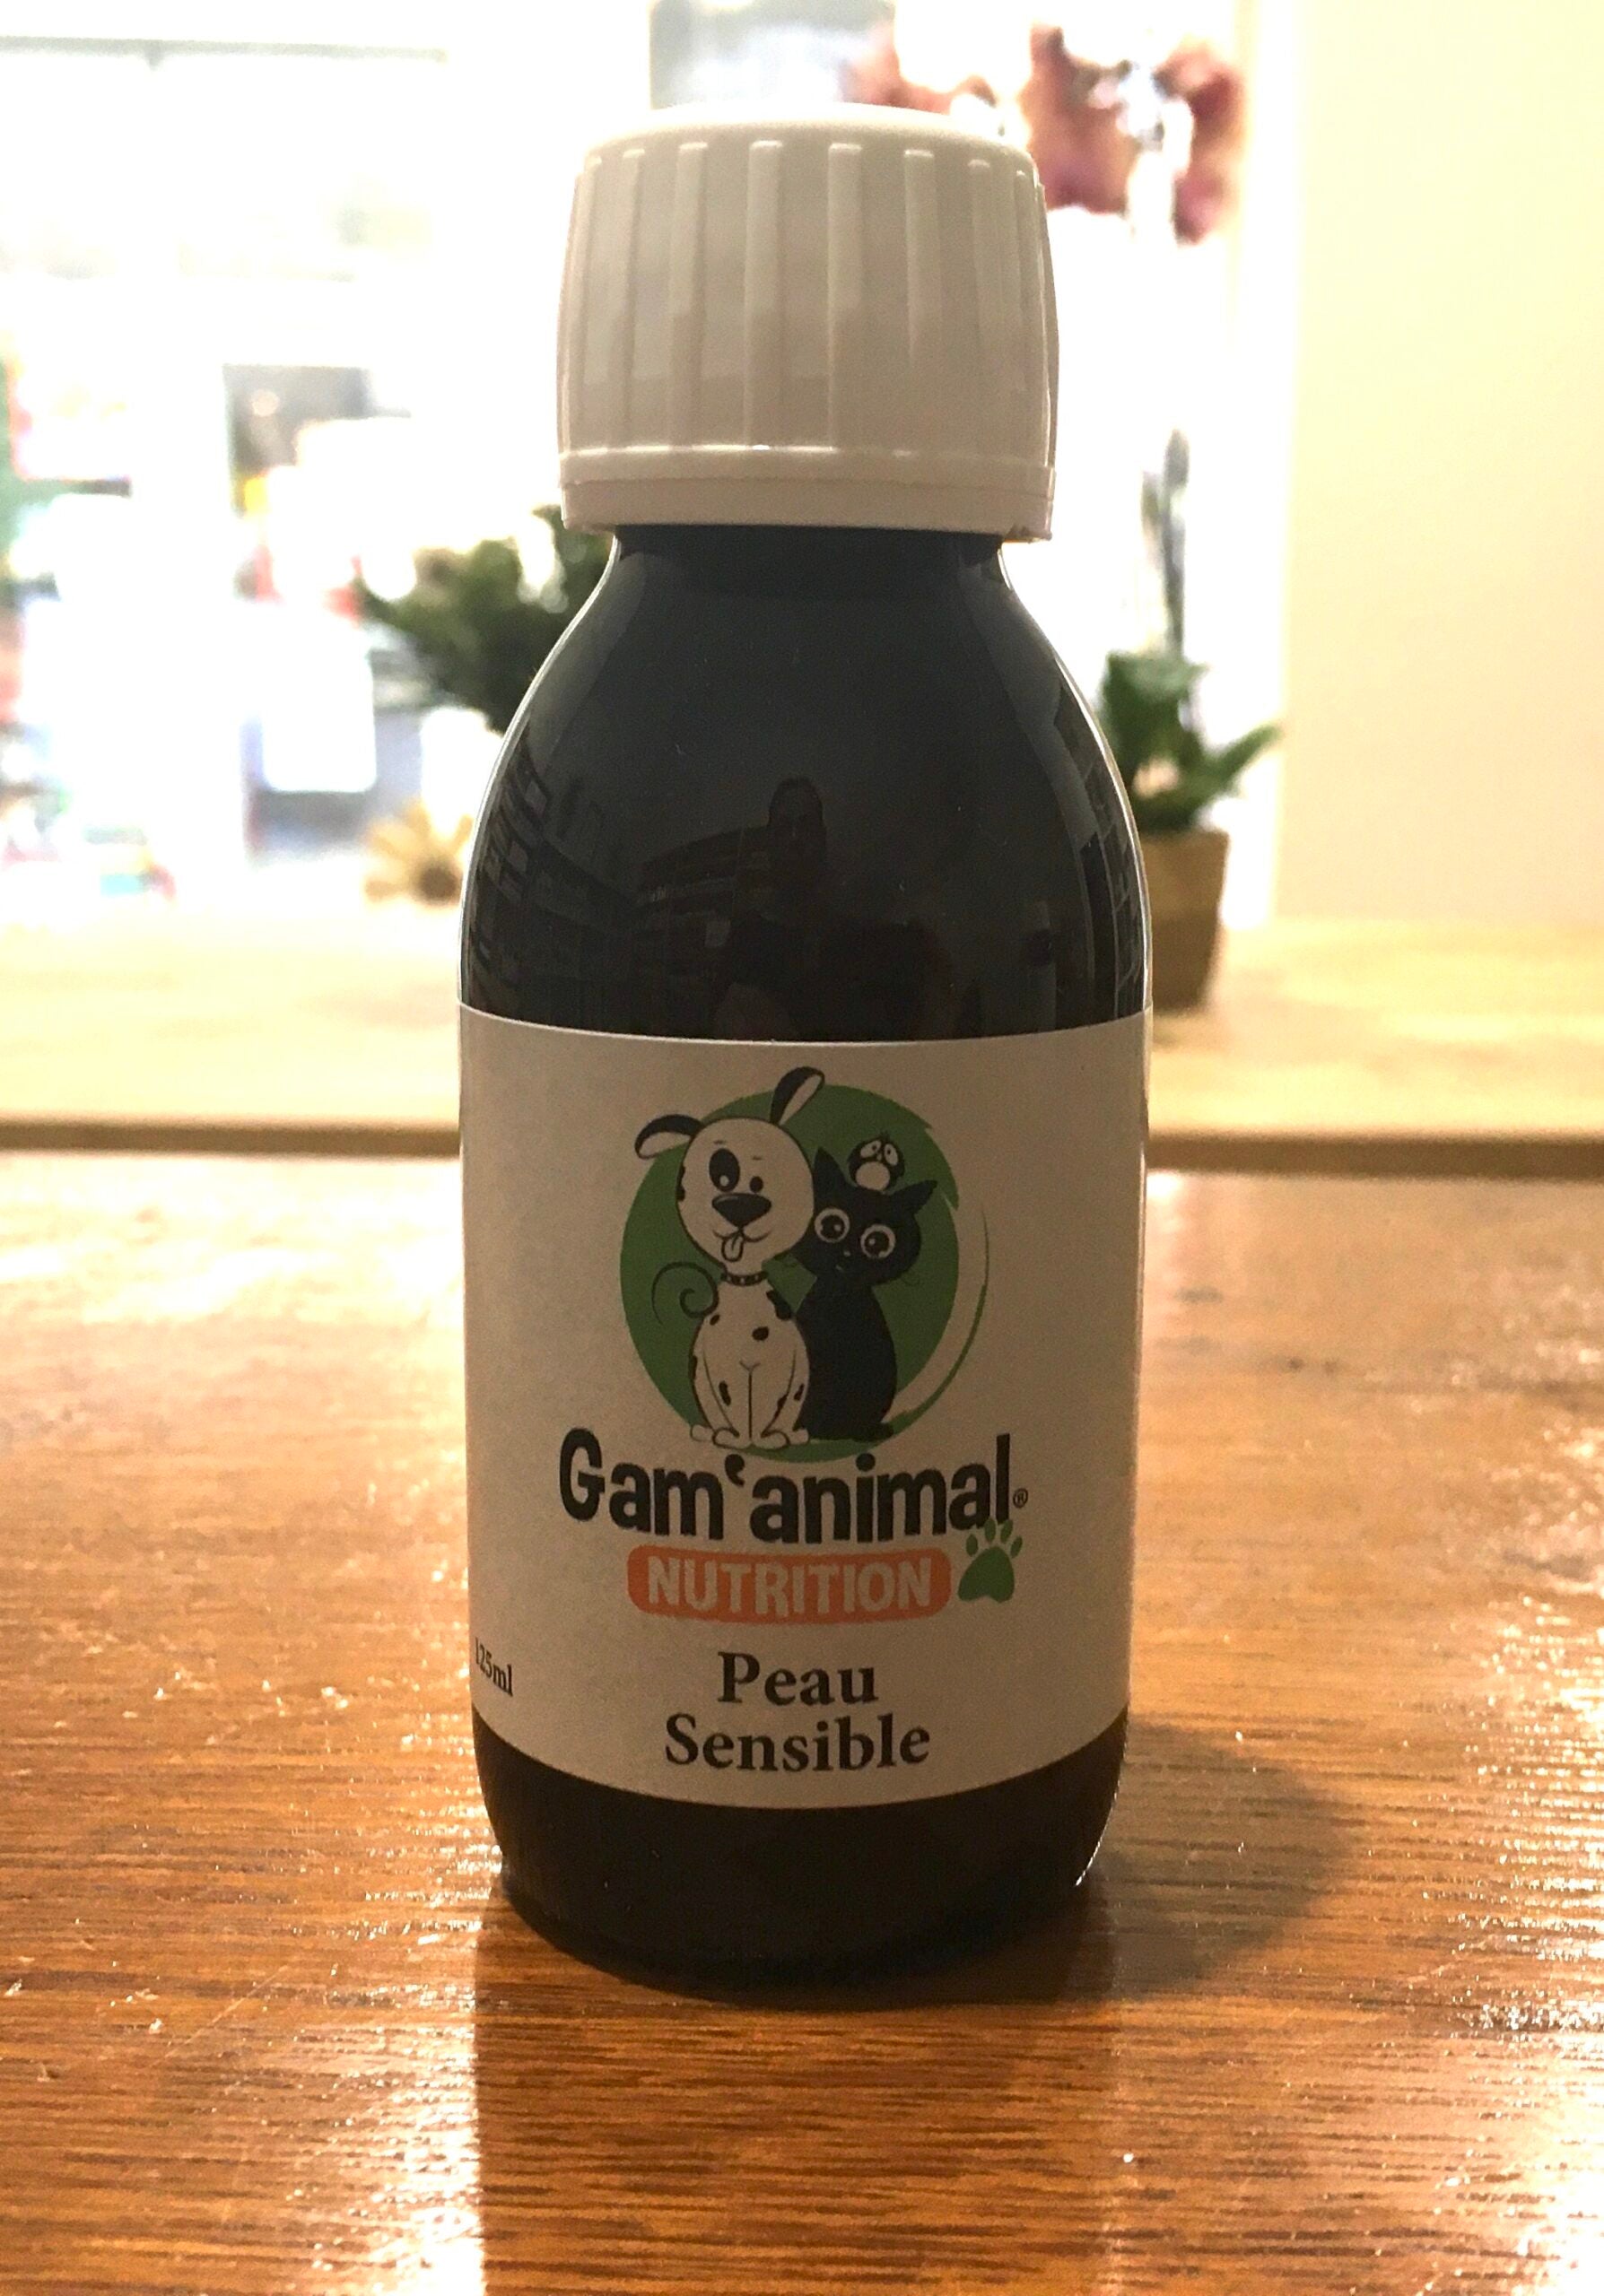 Gam’animal Nutrition - Peau sensible